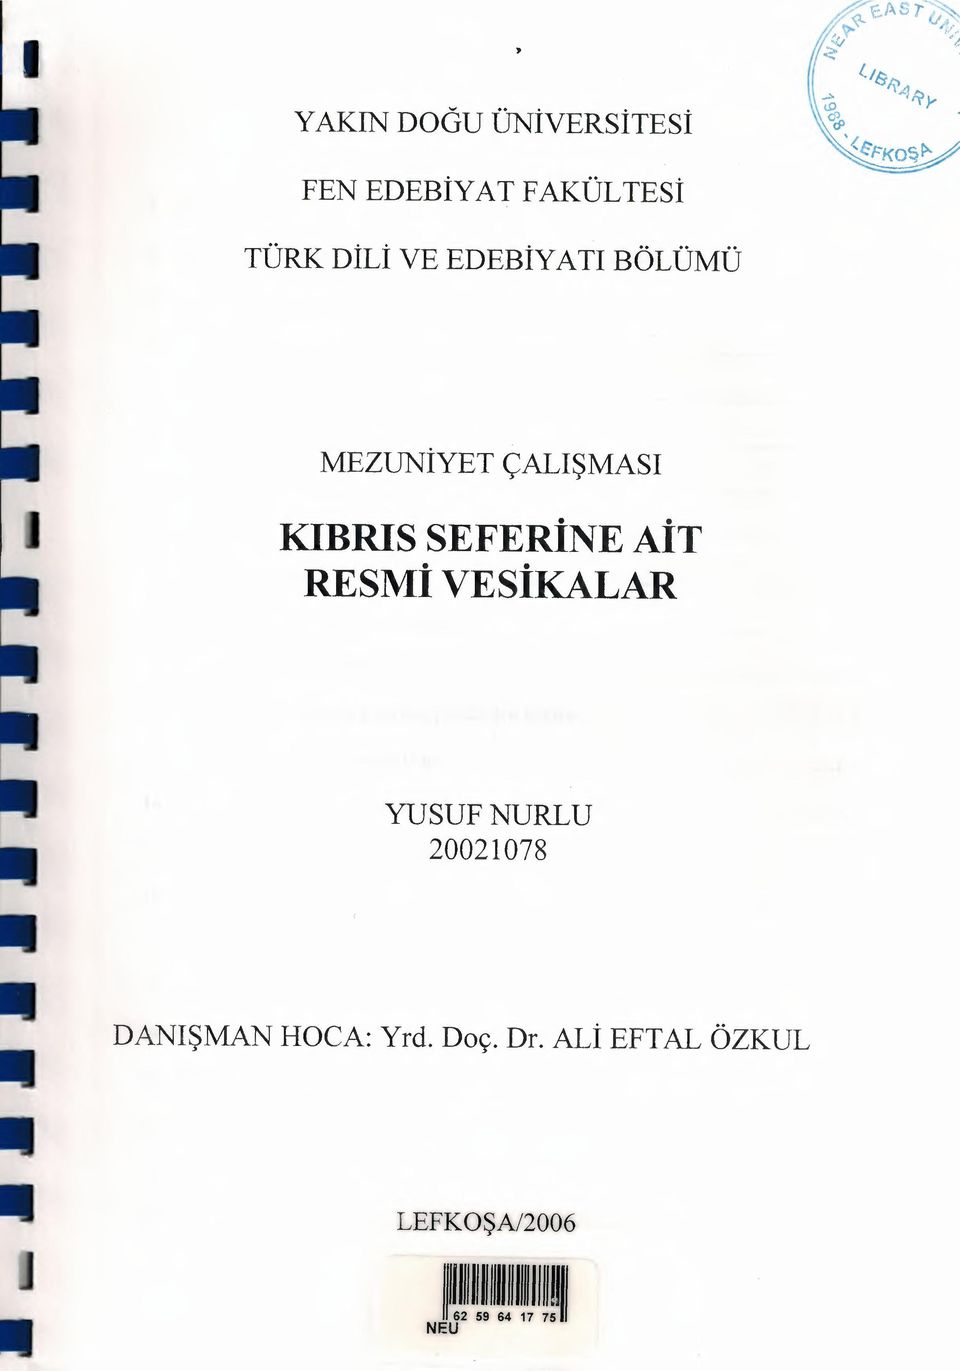 SEFERİNE AİT RESMİ VESİKALAR YUSUF NURLU 20021078 II